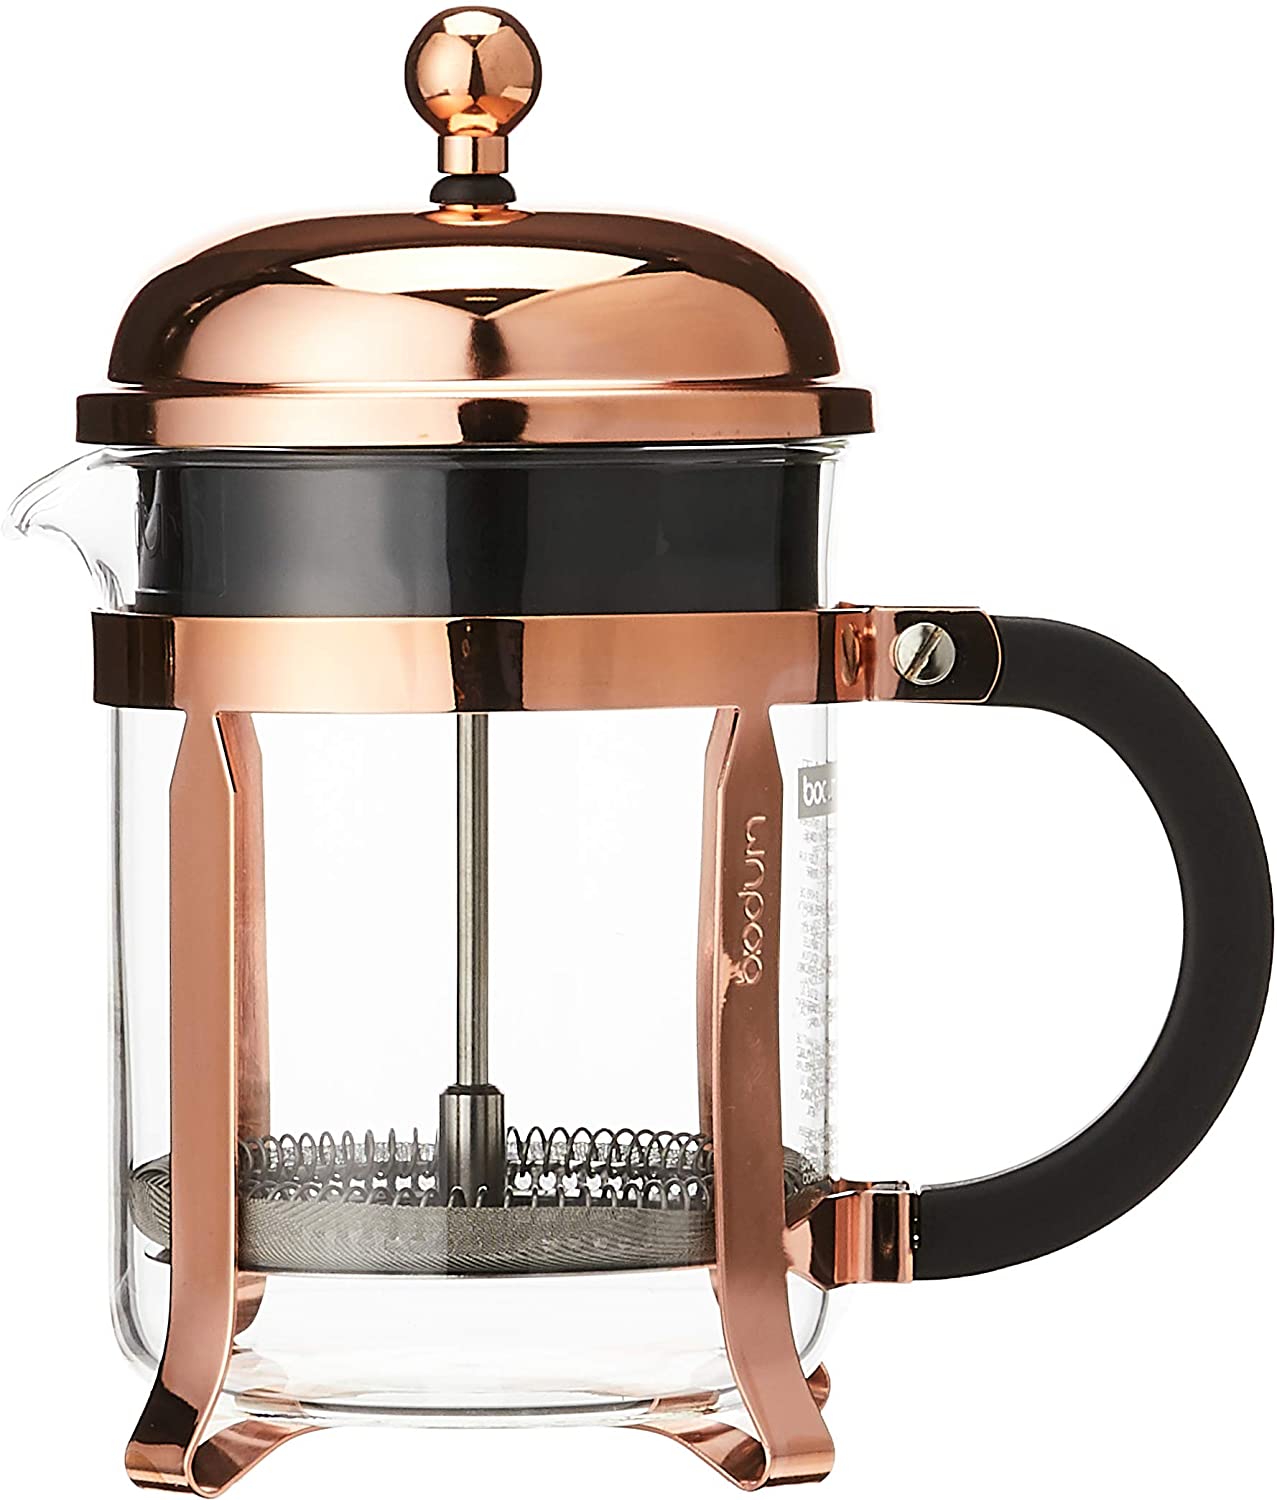 Bodum Chambord 4 Cup Coffee Maker in Chrome, 10.5 x 16.6 x 19 cm pink